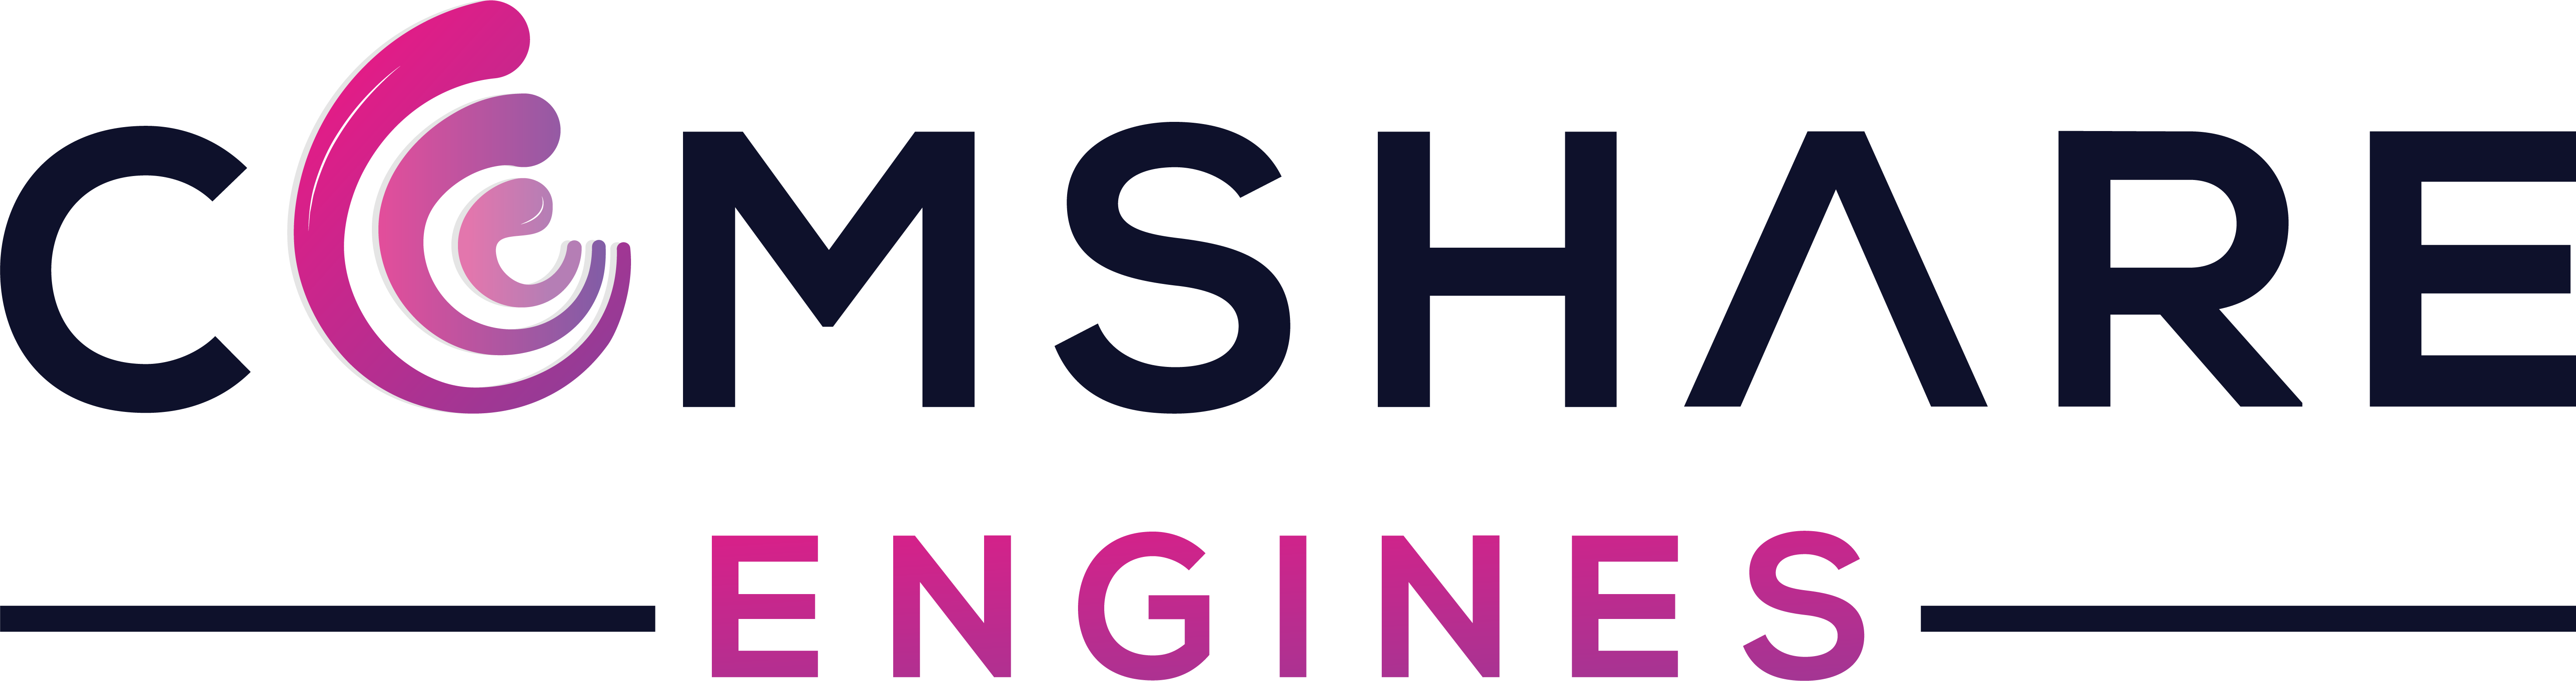 comshare-engines-logo